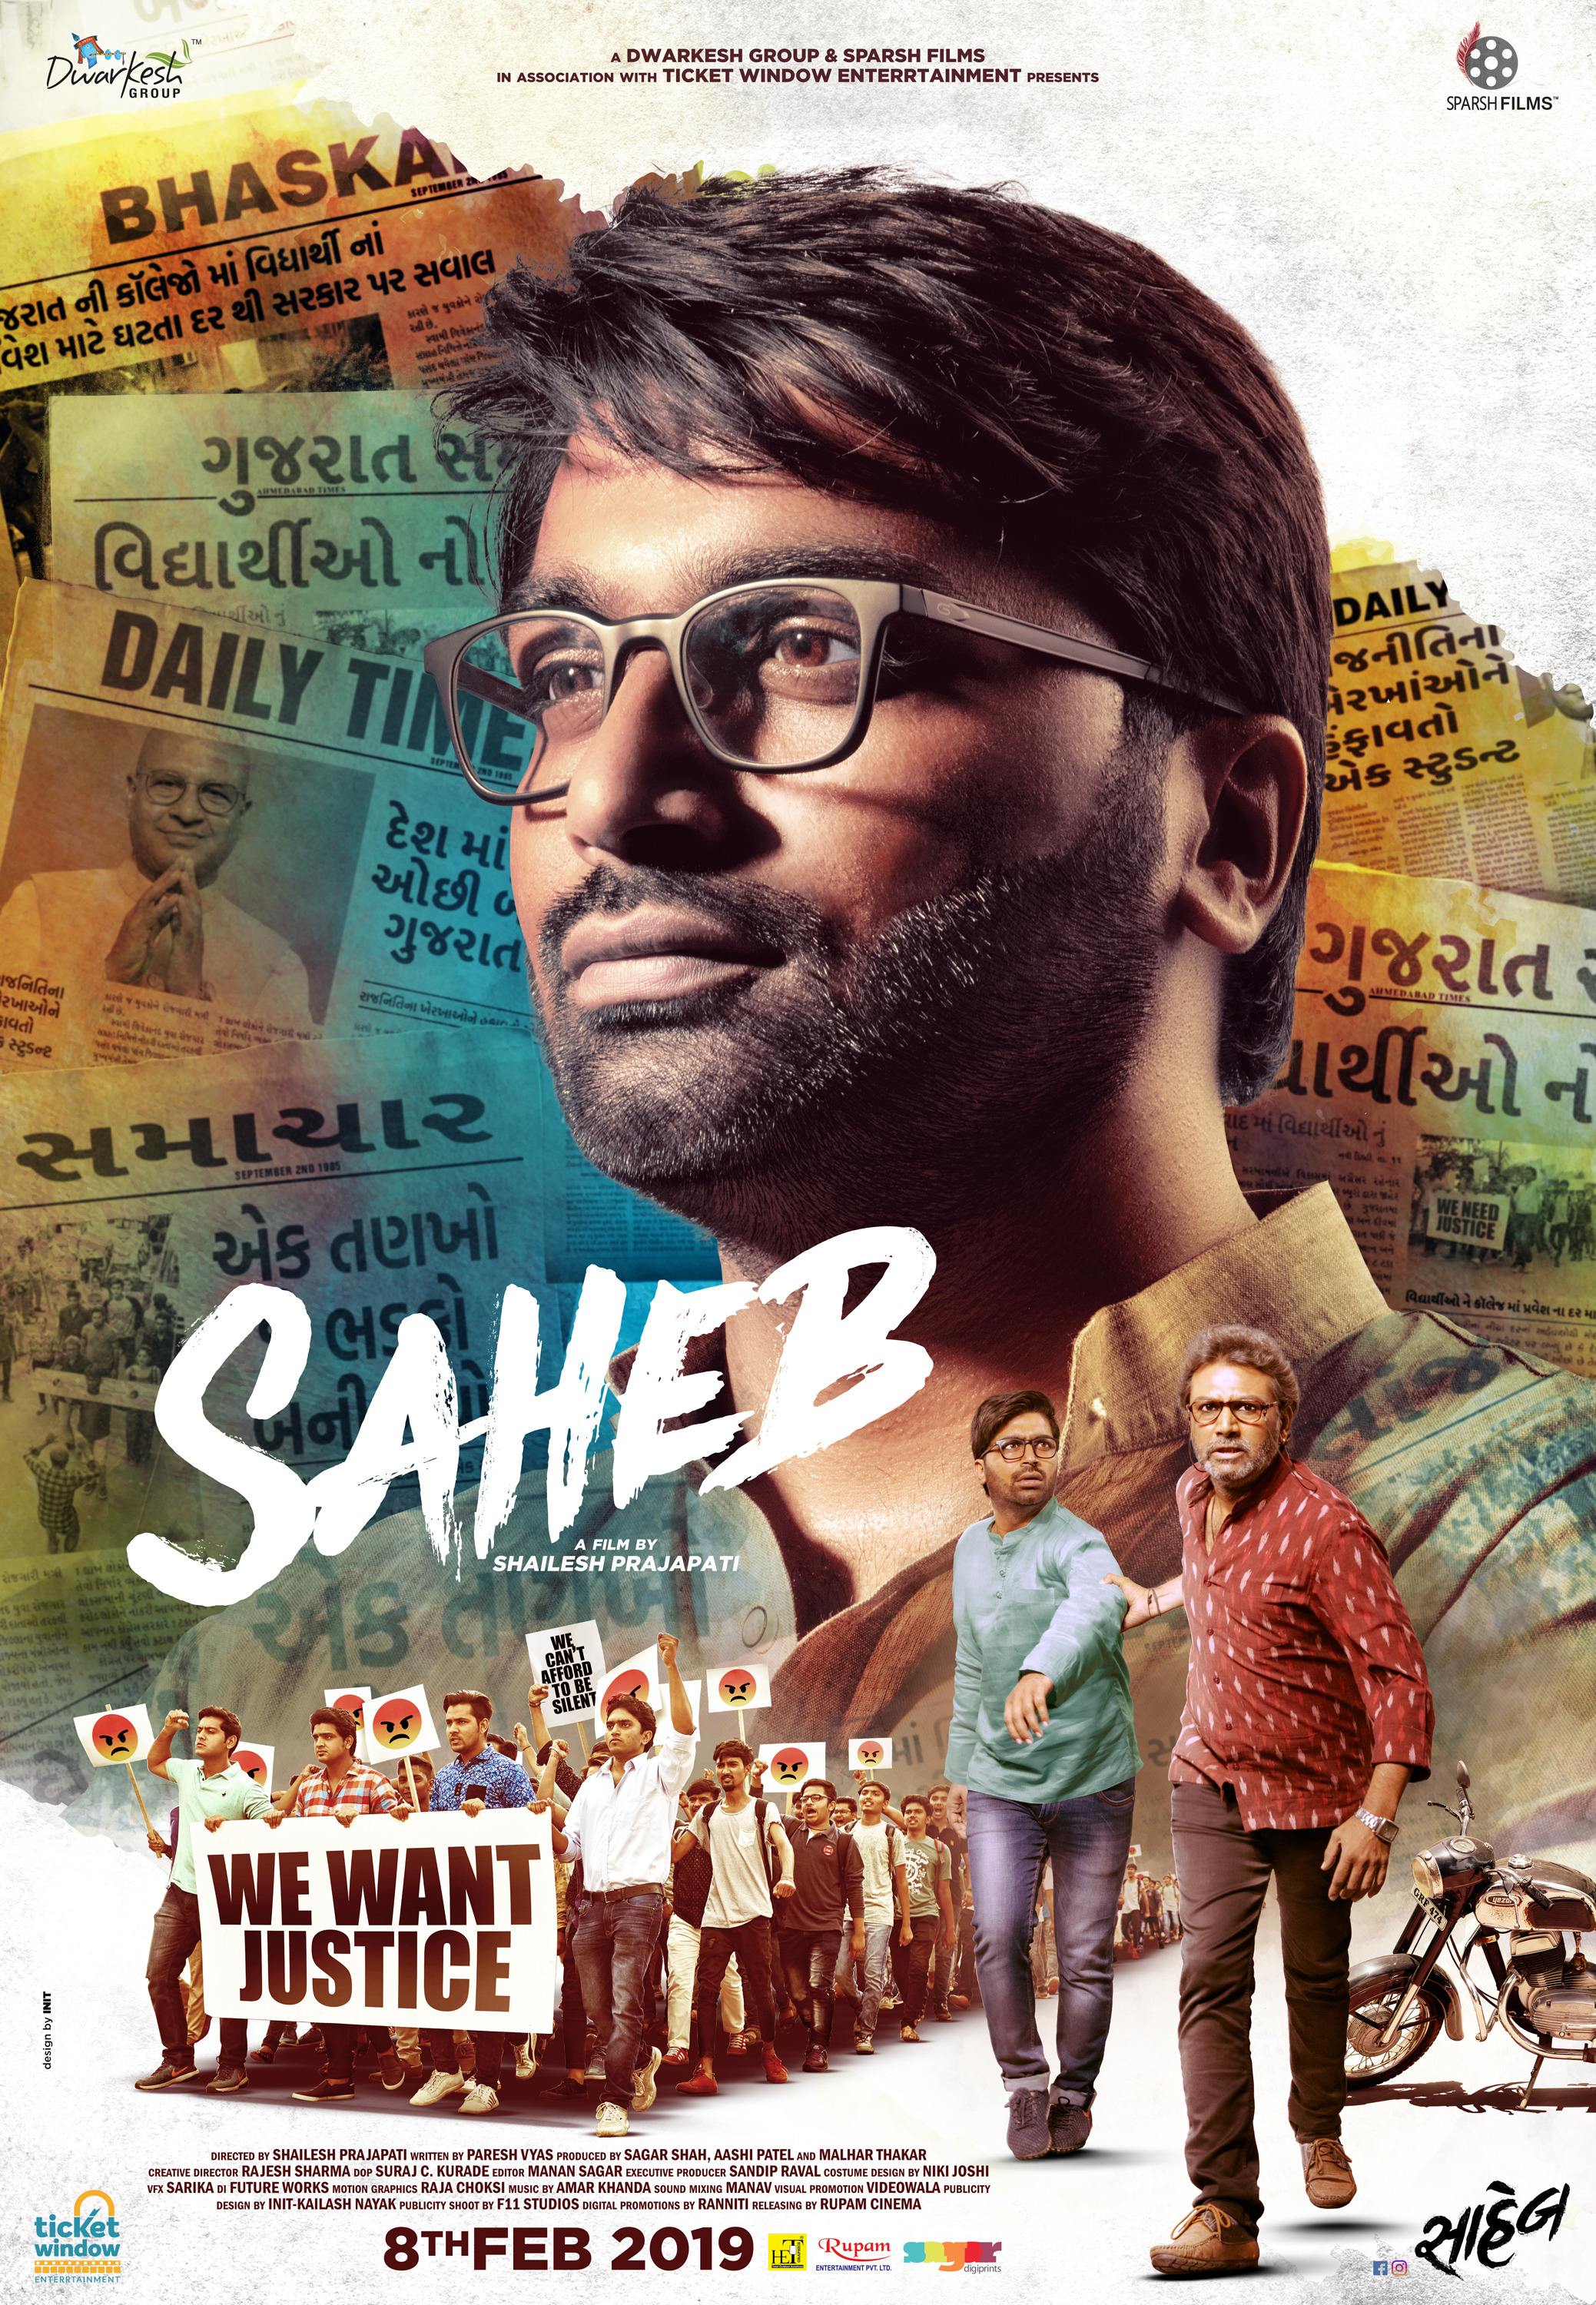 Mega Sized Movie Poster Image for Saheb (#1 of 4)